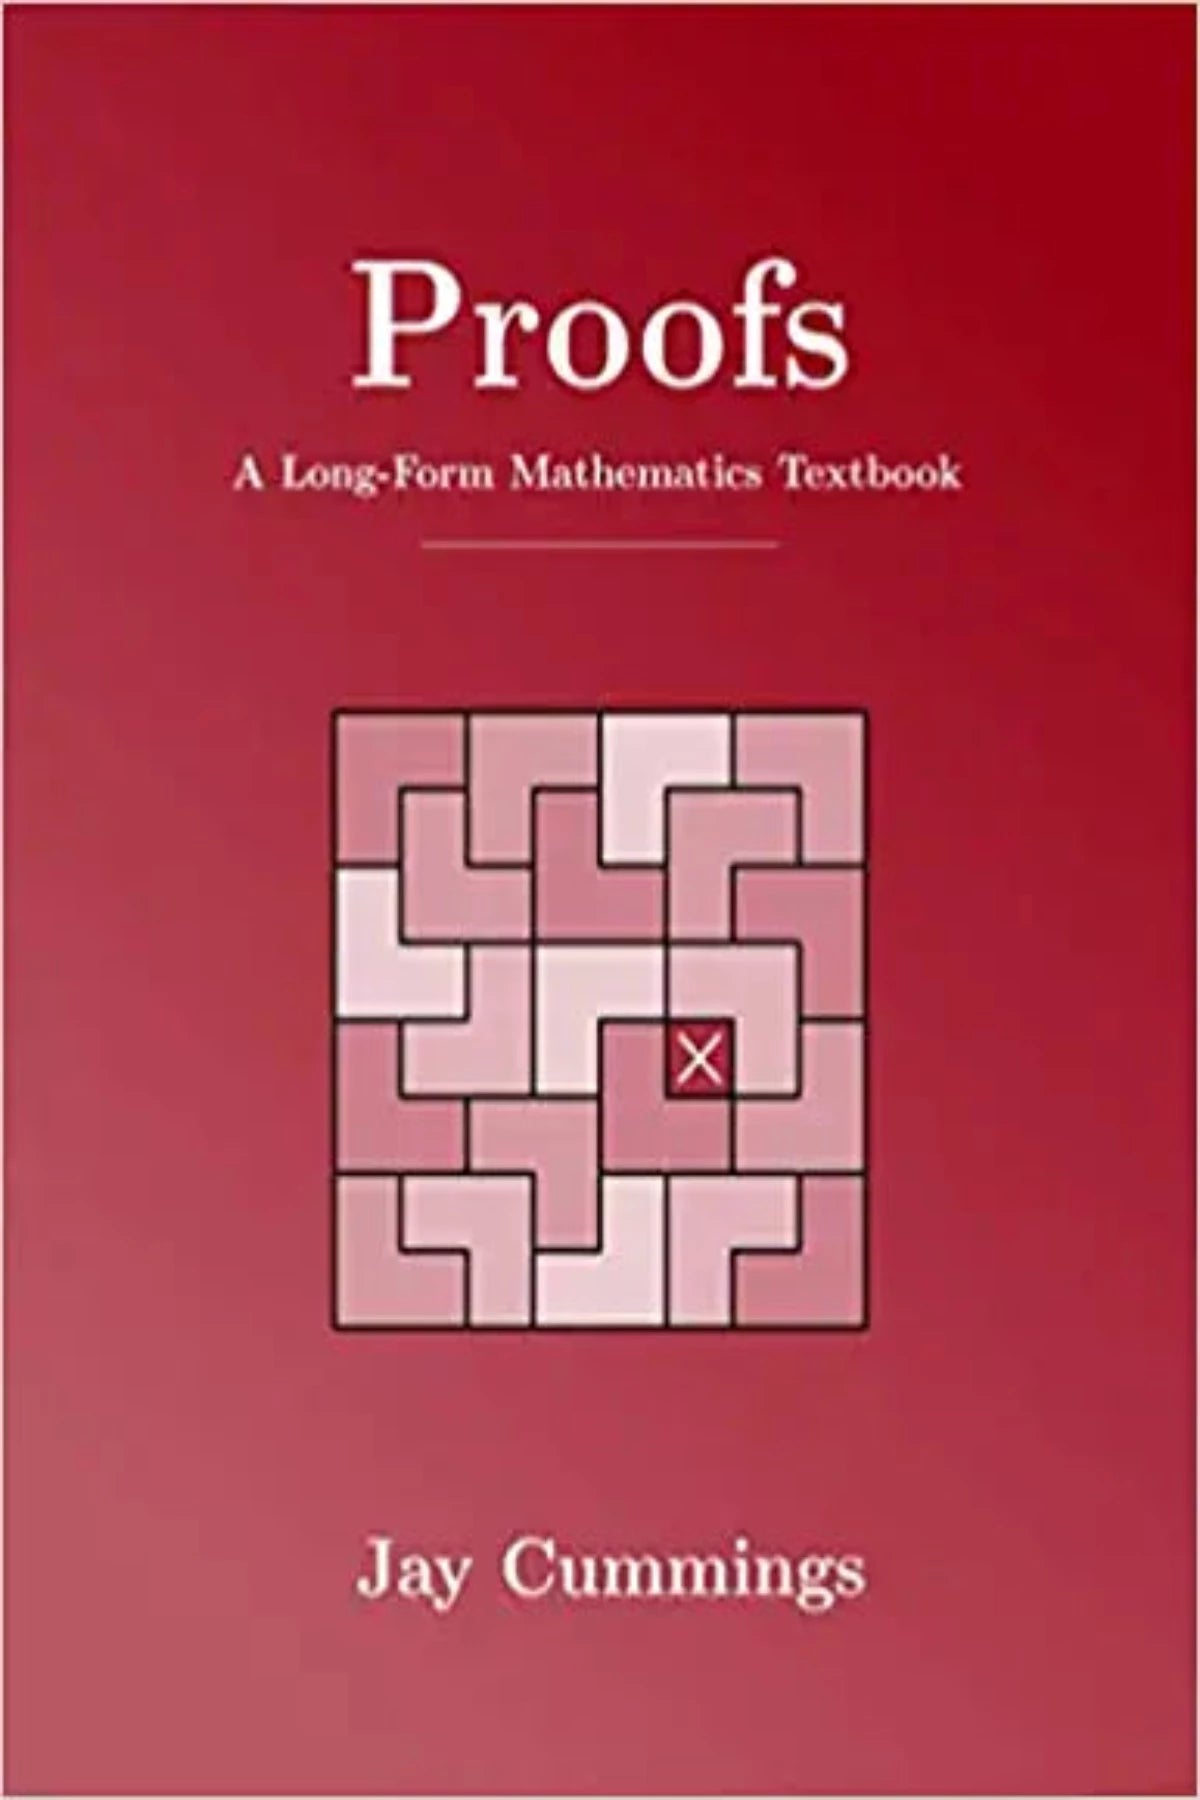 Proofs: A Long-Form Mathematics Textbook